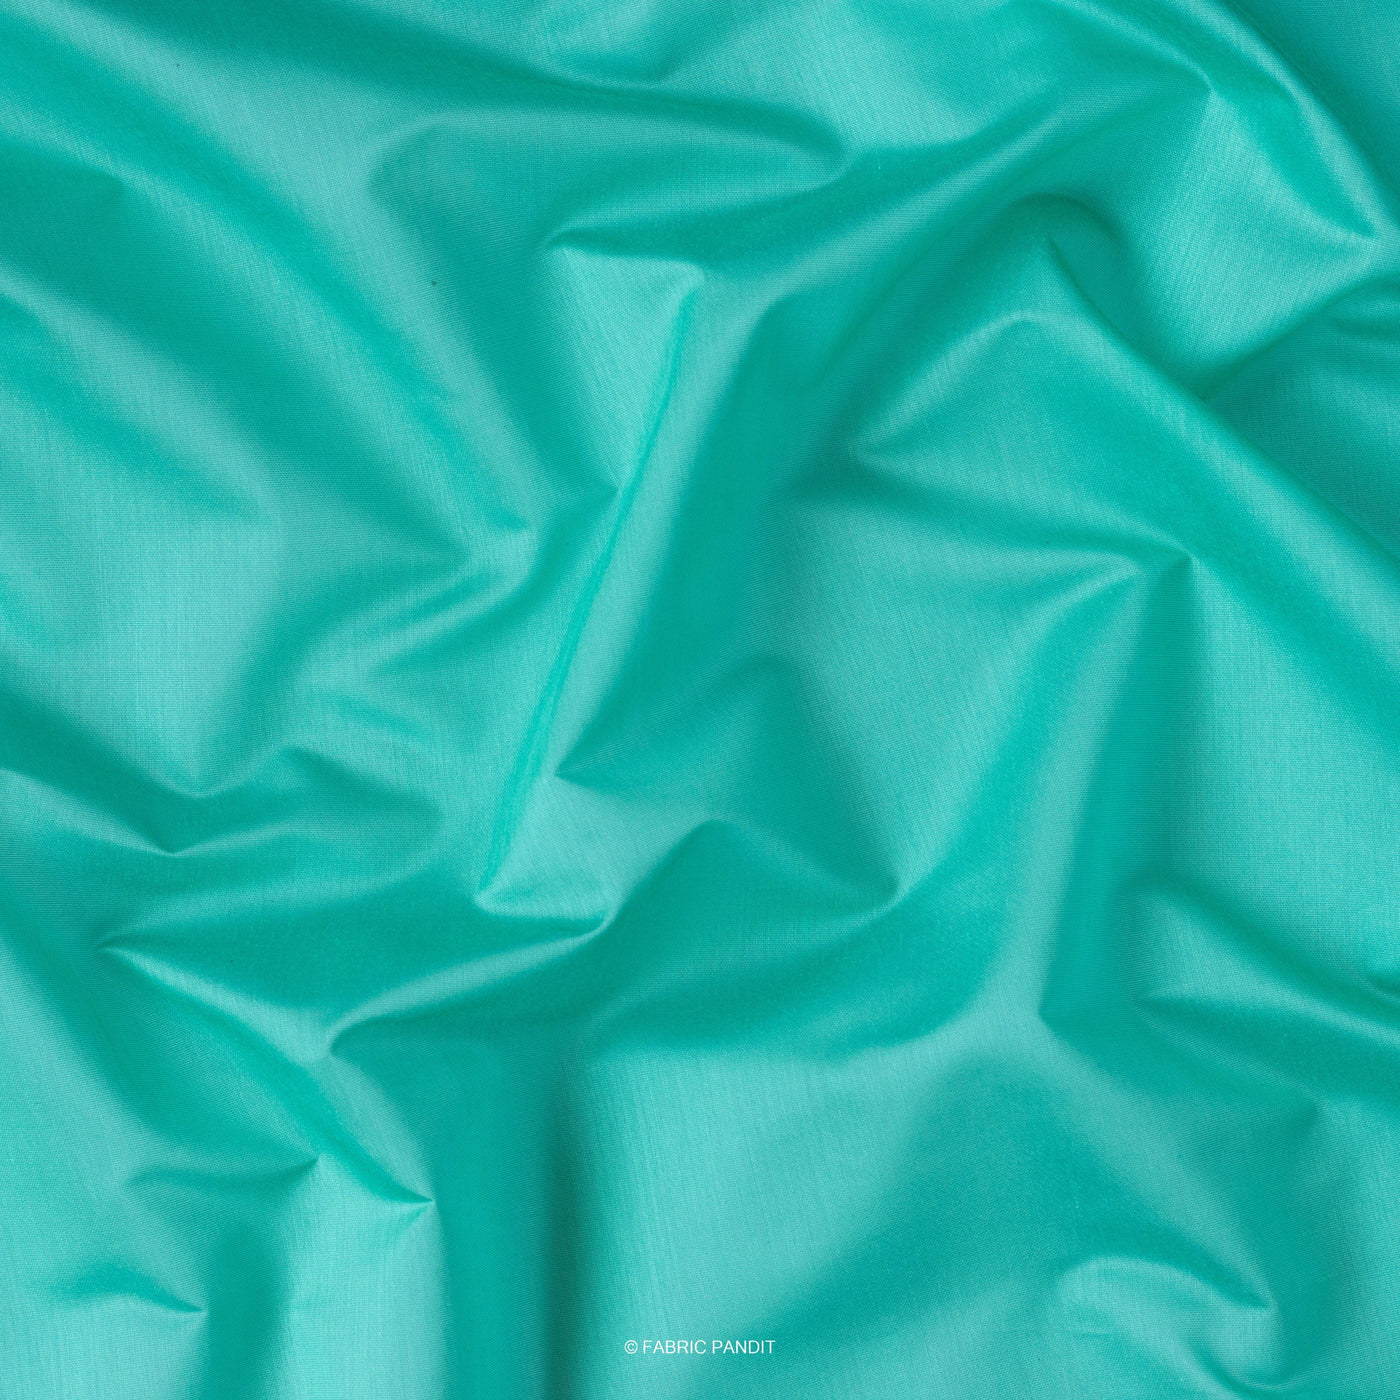 Fabric Pandit Fabric Sea Green Color Plain Chanderi Fabric (Width 43 Inches)